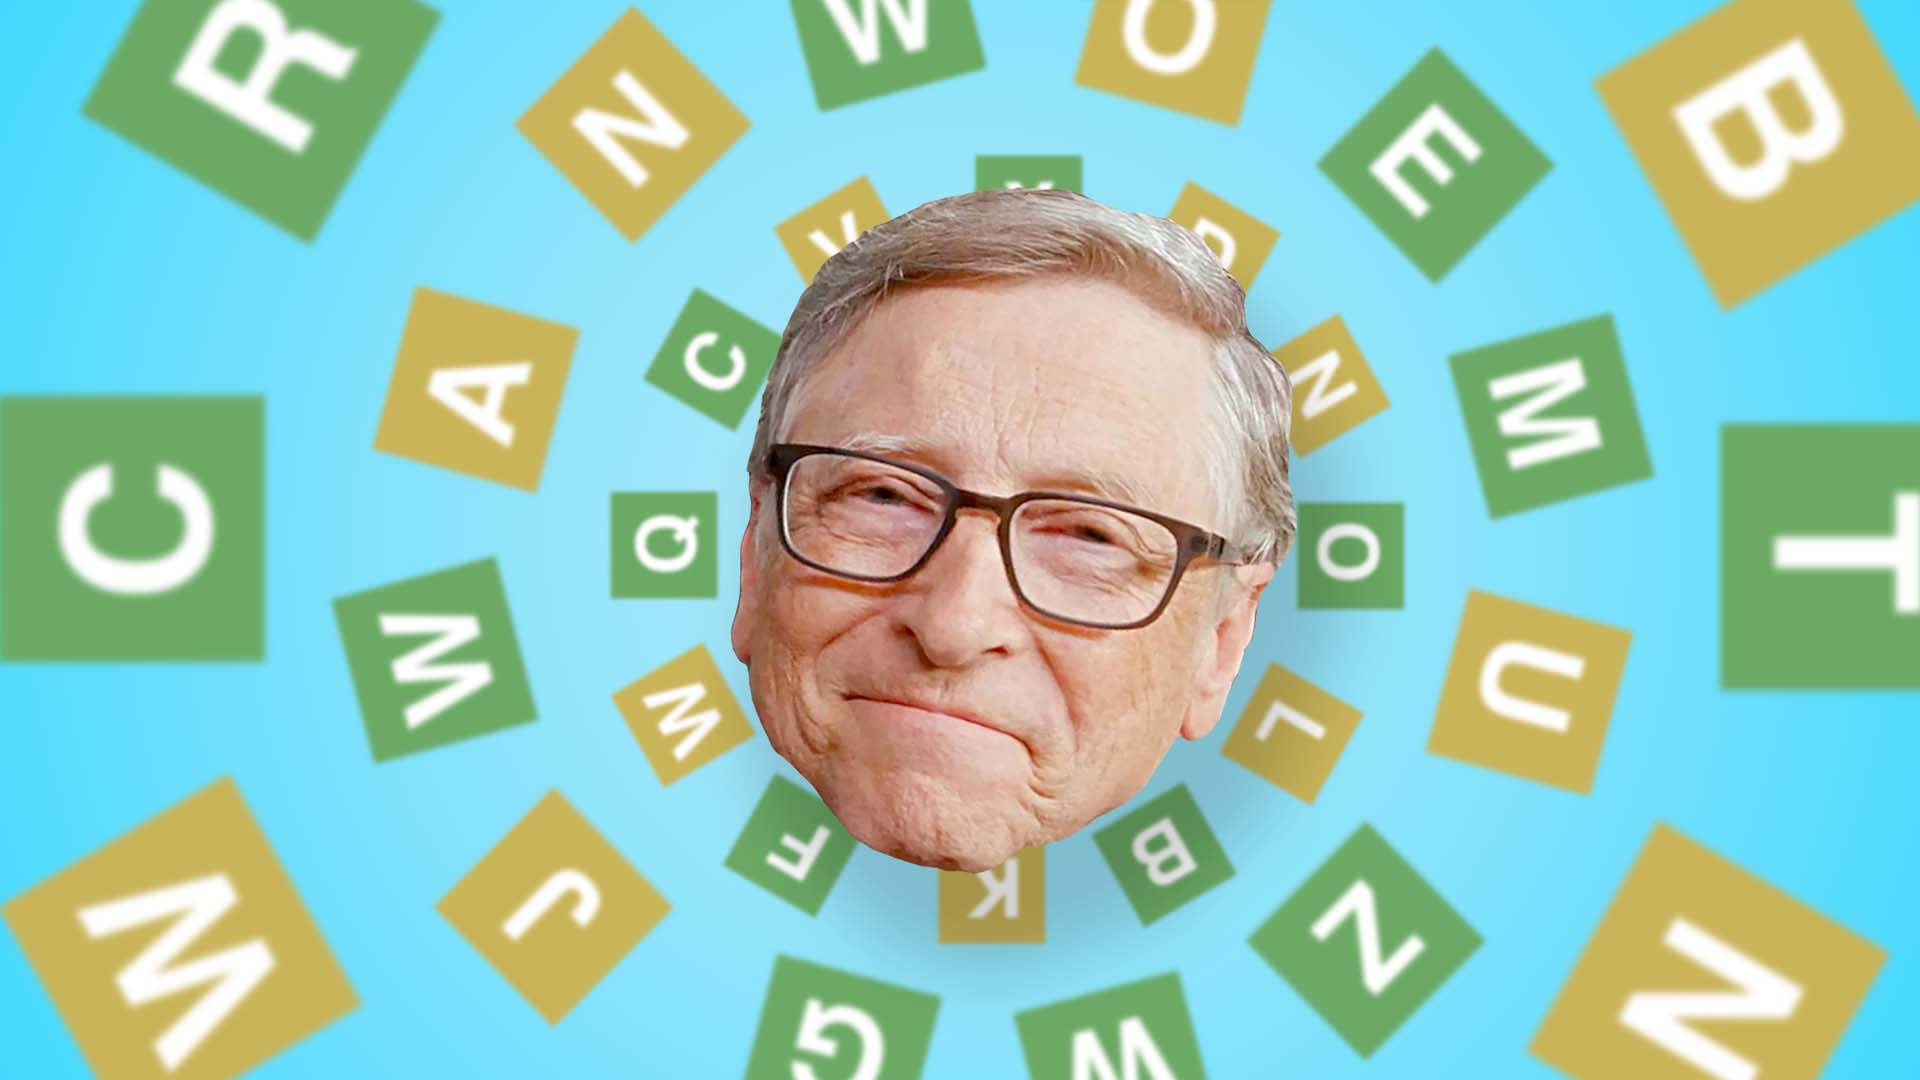 Wordle Bill Gates Wallpaper